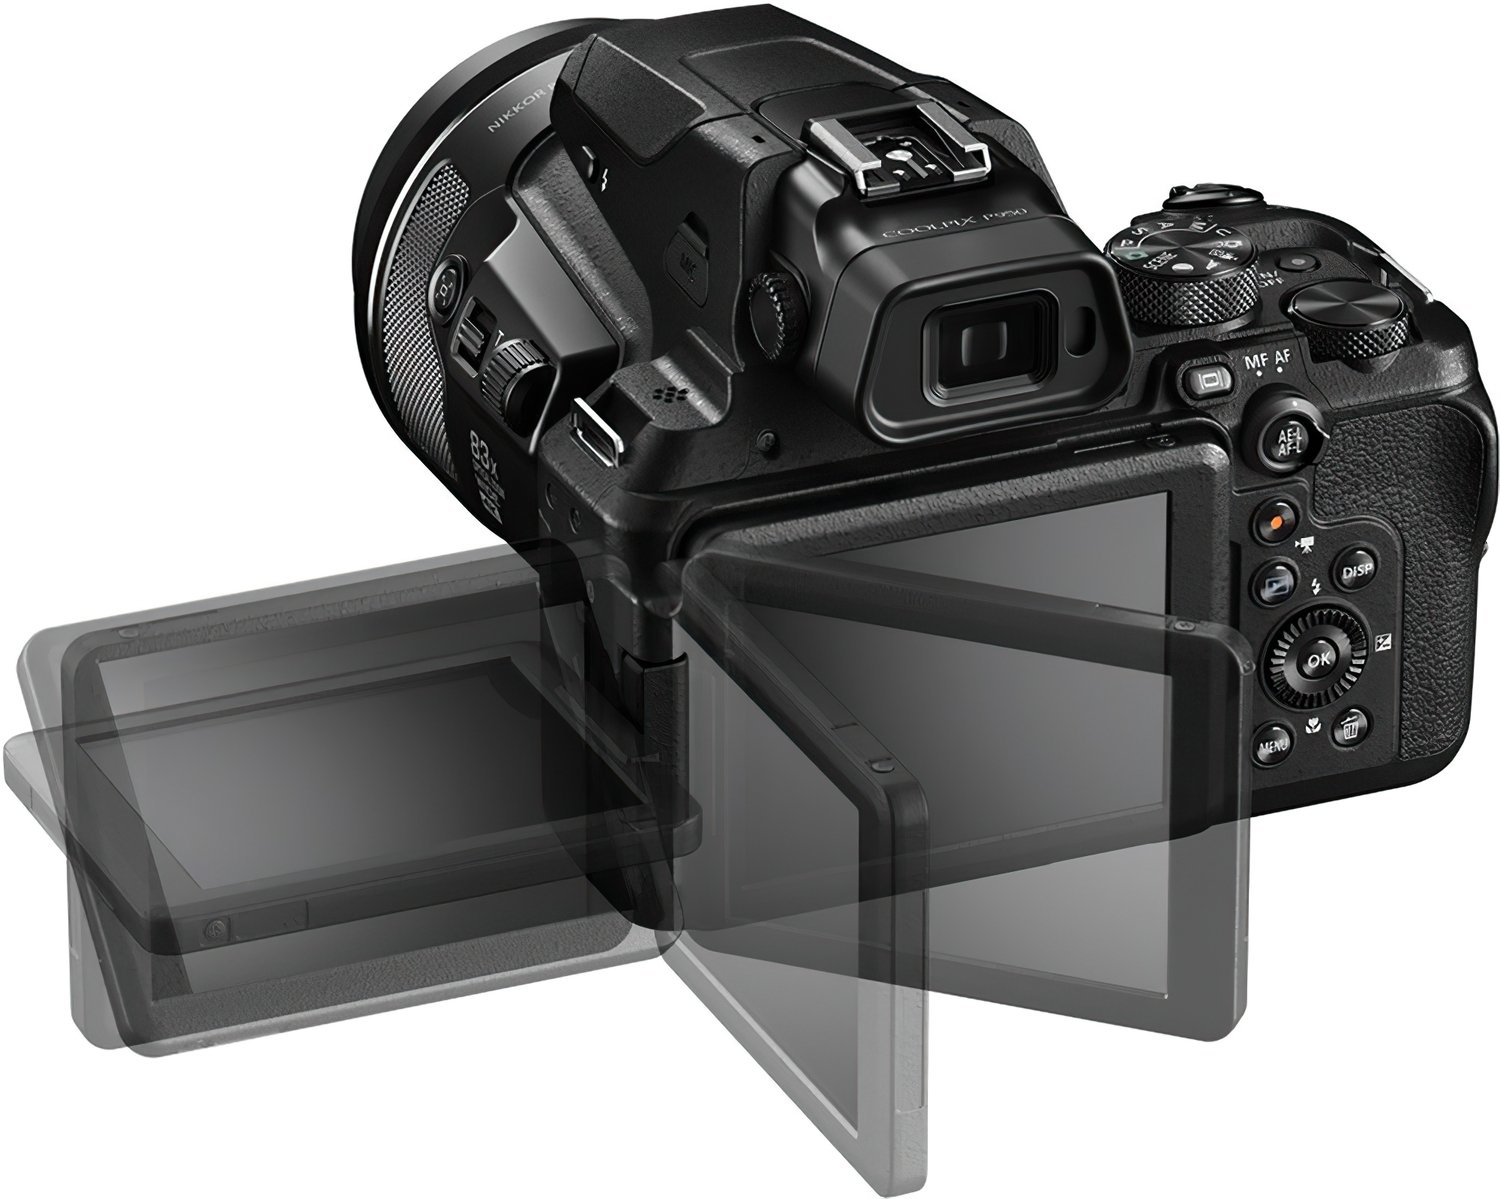 Фотоаппарат Nikon CoolPix P950 nikkor 83x wide optical zoom ed vr 4.3-357 mm 1:2.8-6.5, черный